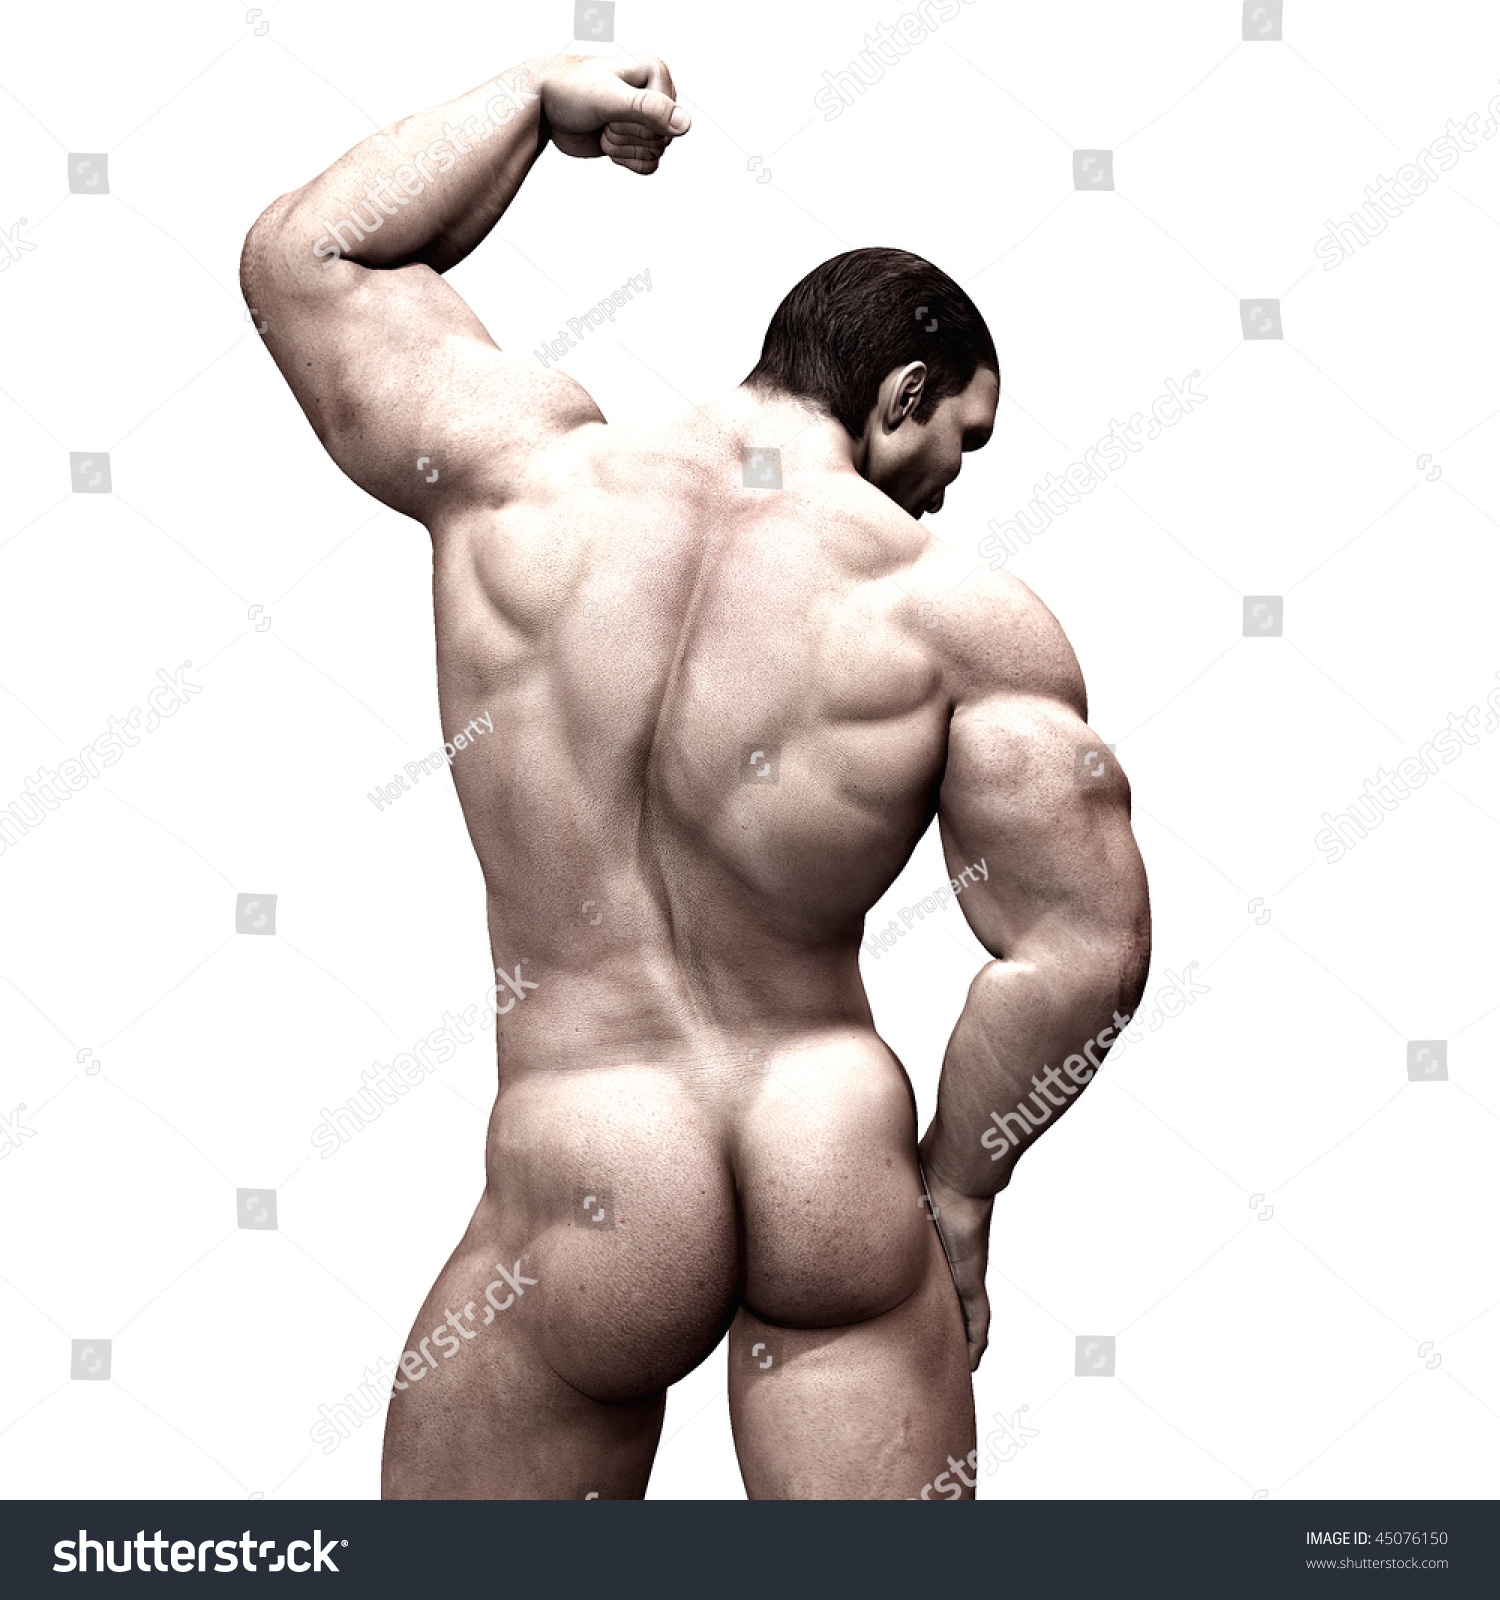 becky sayles share nude male bodybuilder photos